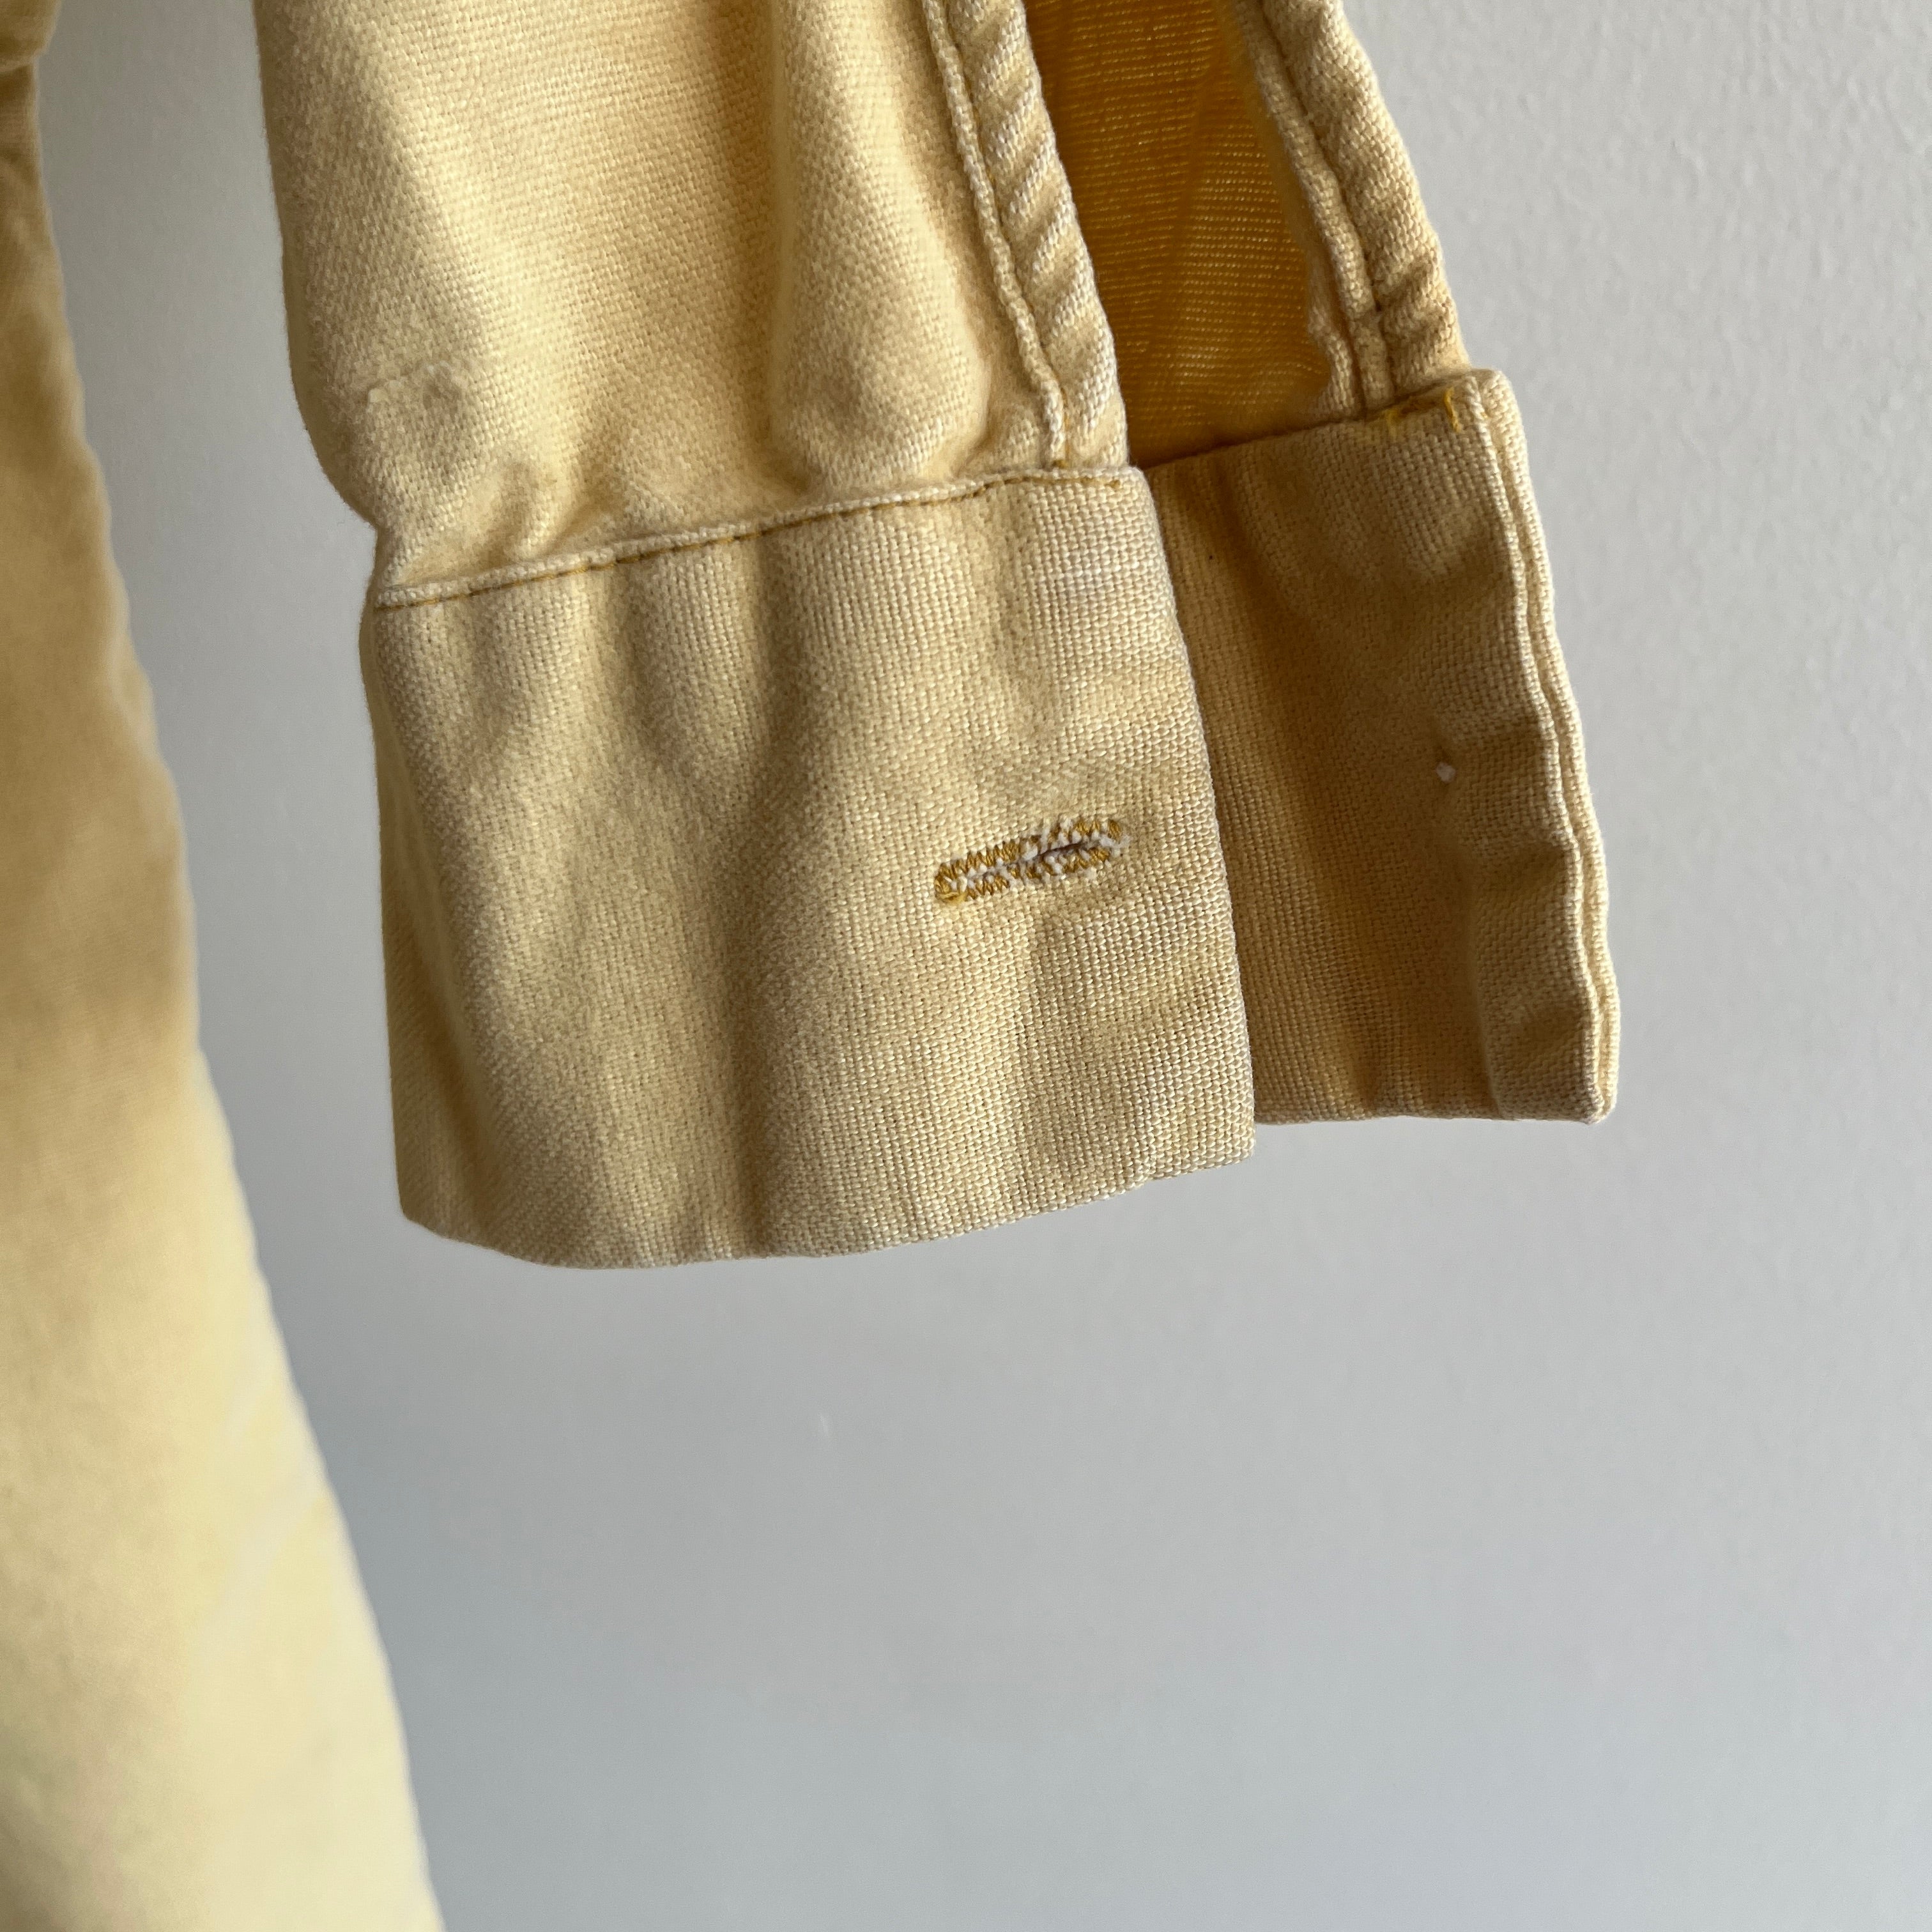 1970s The Woodsman Klondike Super Soft Chamois or Moleskin Cotton Flannel